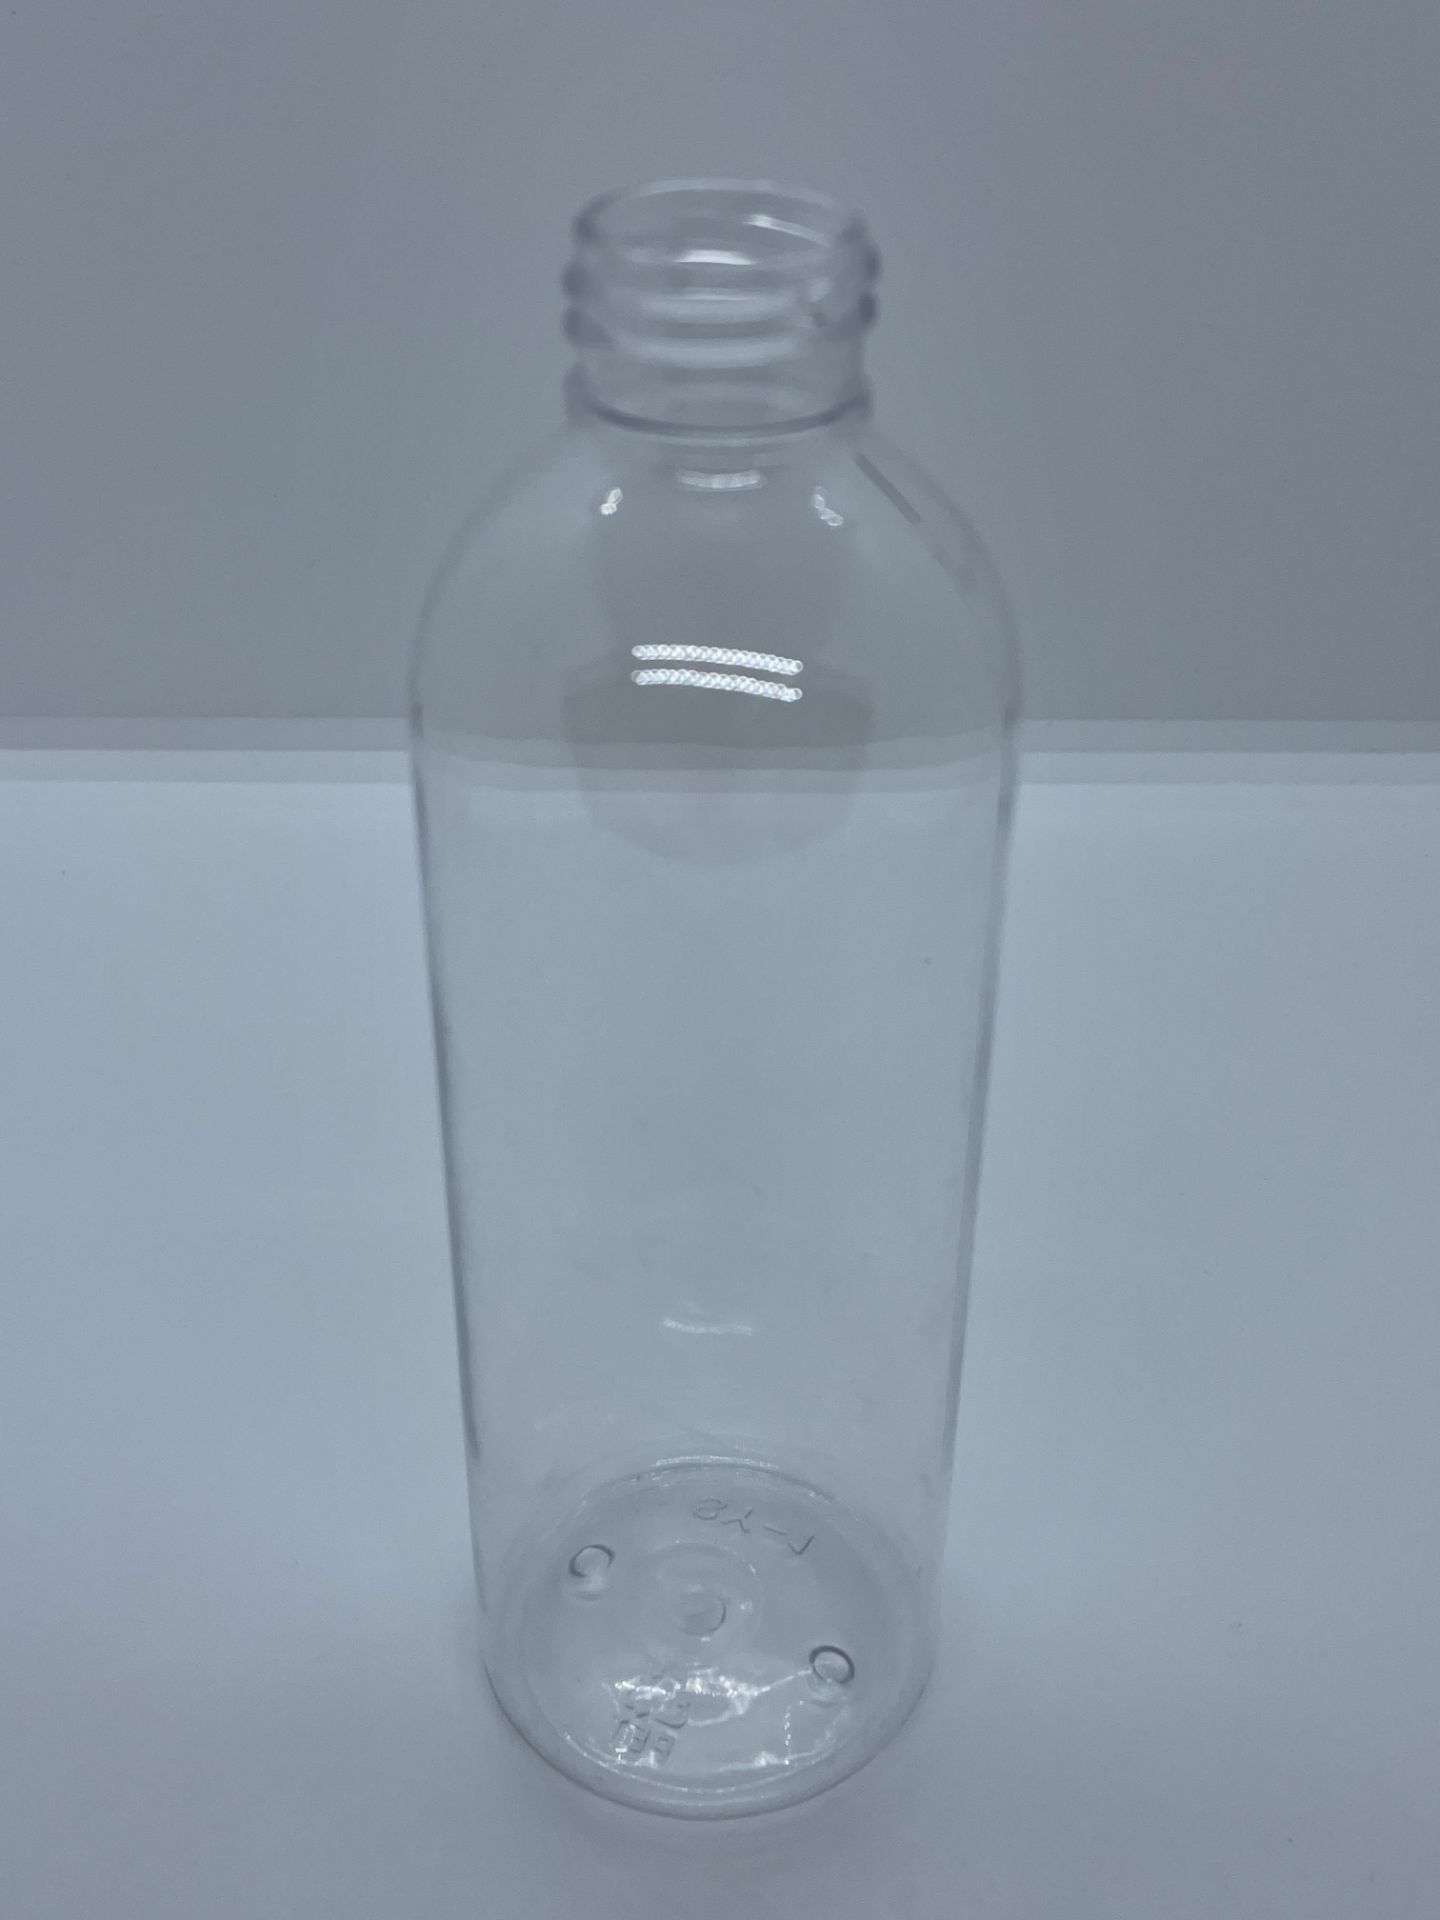 75,000 - Clear Plastic Bullet 8 oz Empty Bottles, 24-410 Threading Neck, 6.25" Tall, 2" Diameter - Image 3 of 10